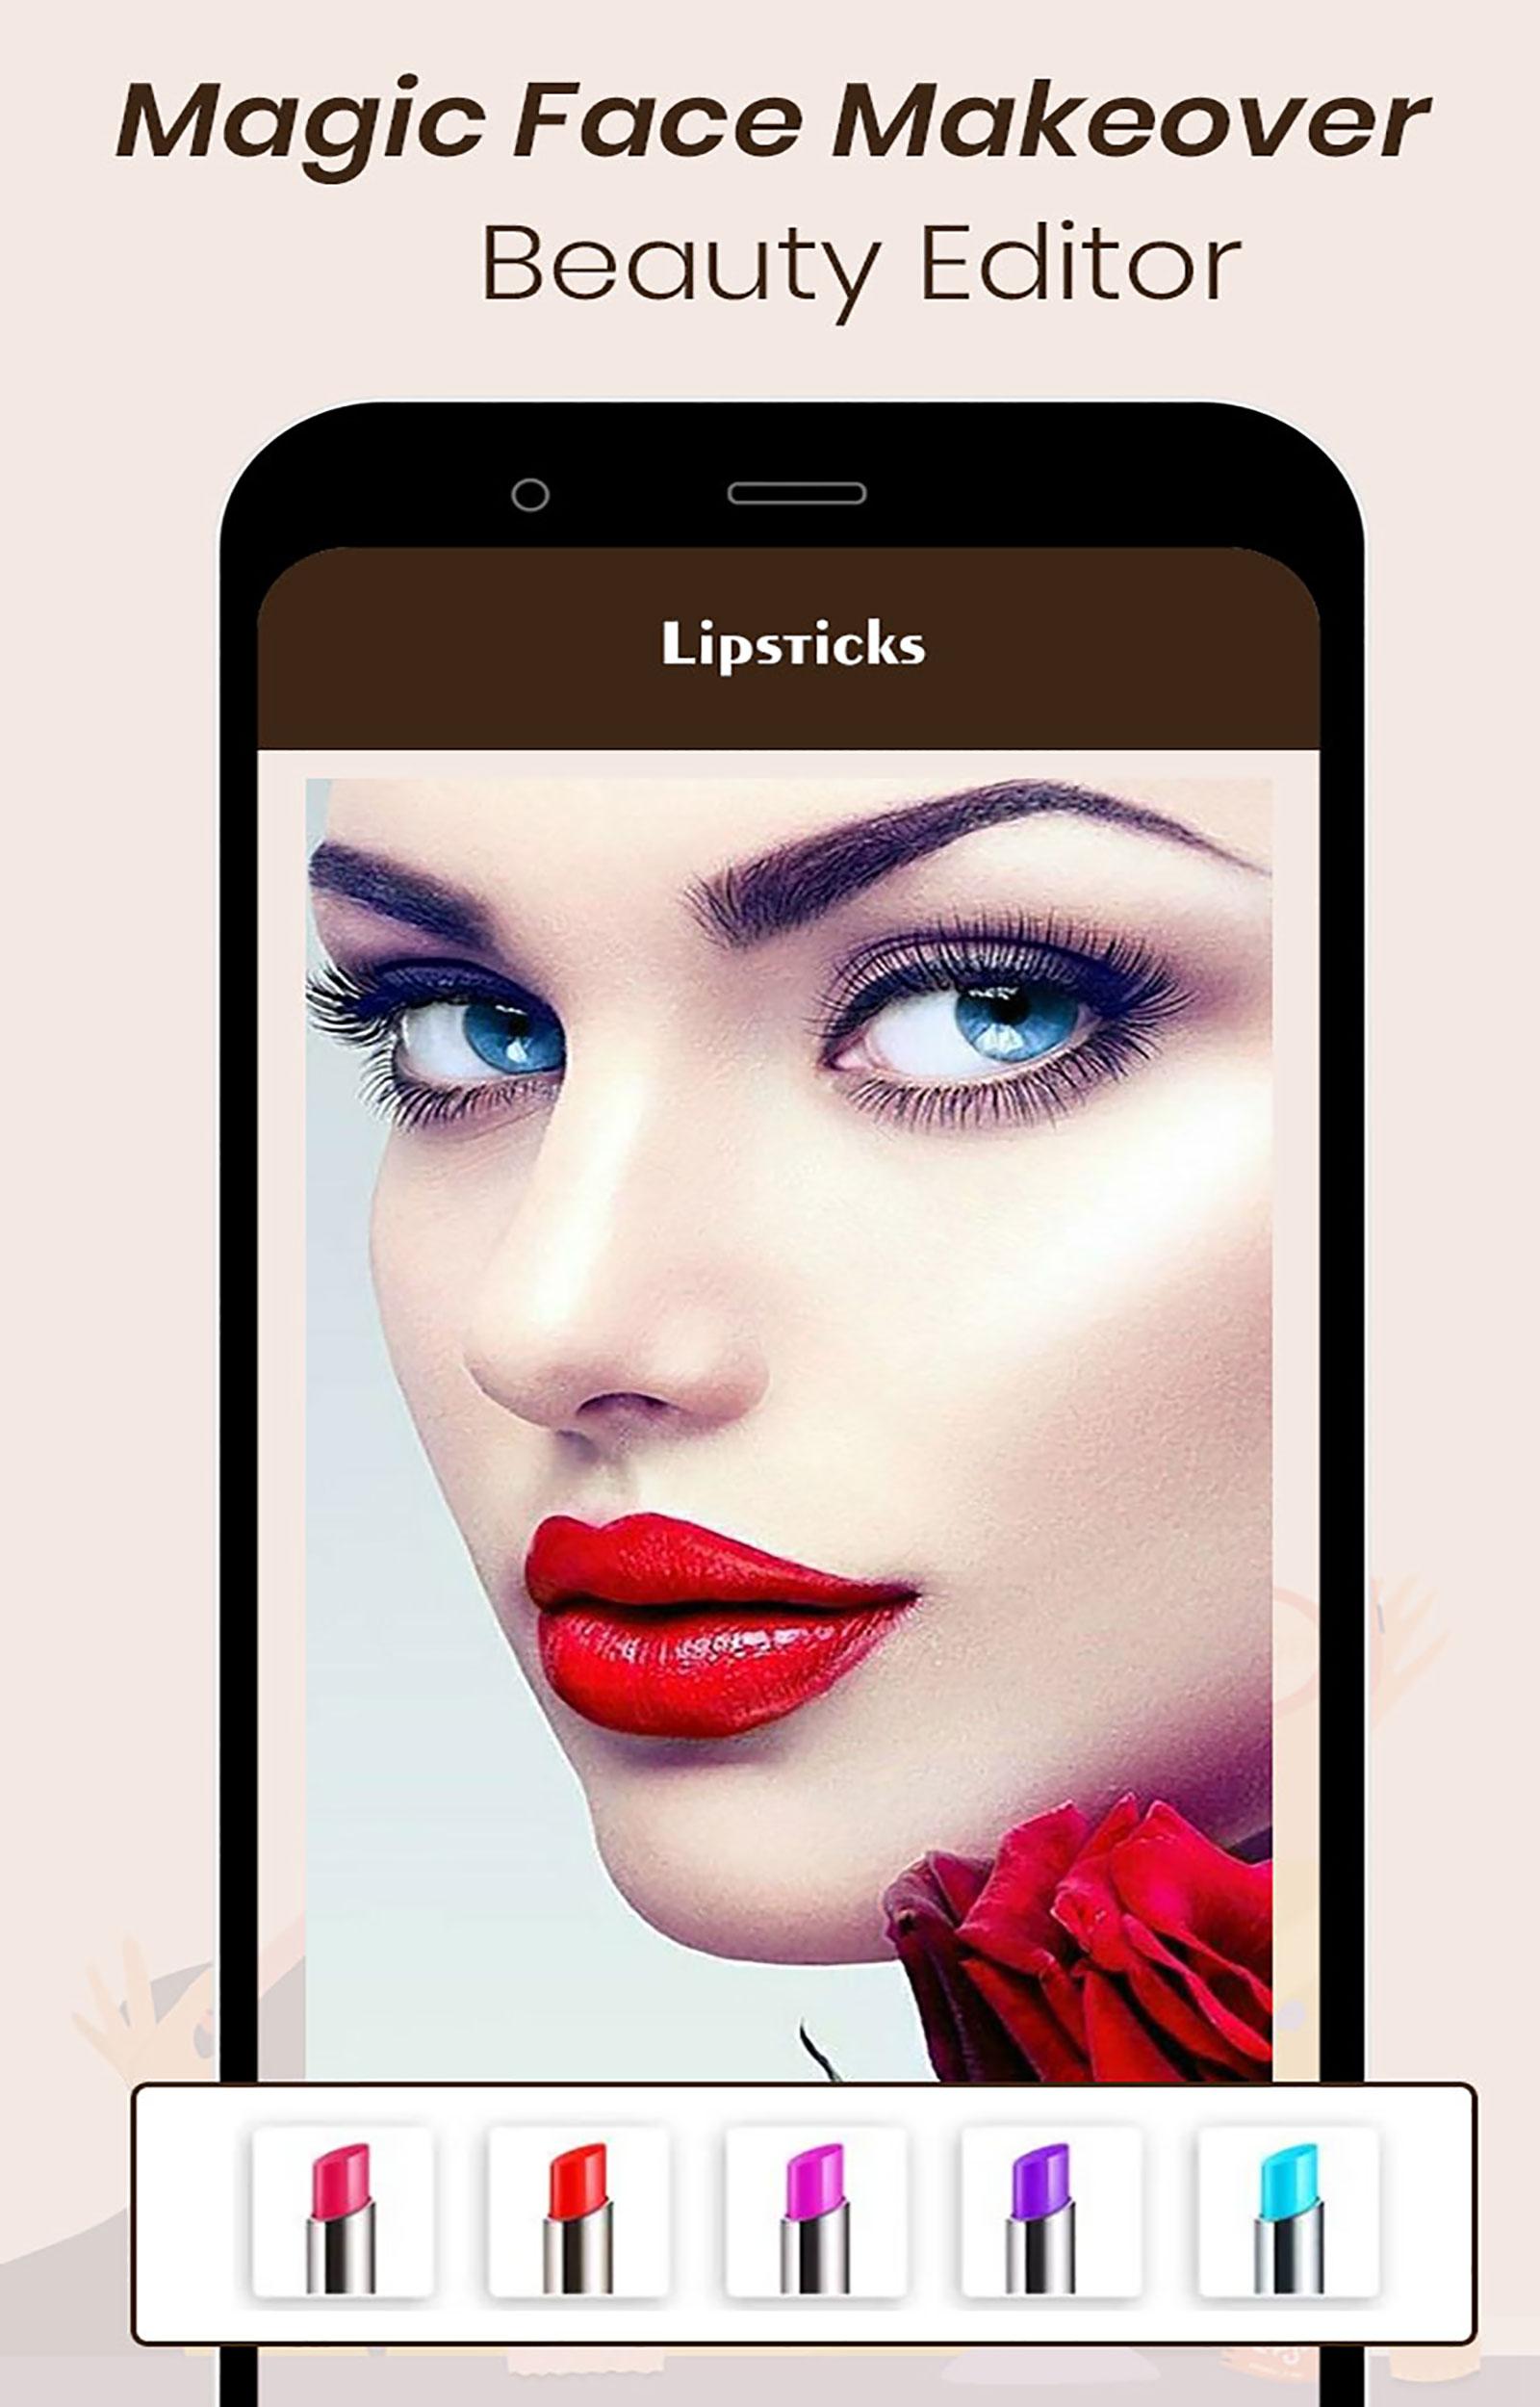 Magic Face Makeover - Beauty Editor 1.0 Screenshot 9